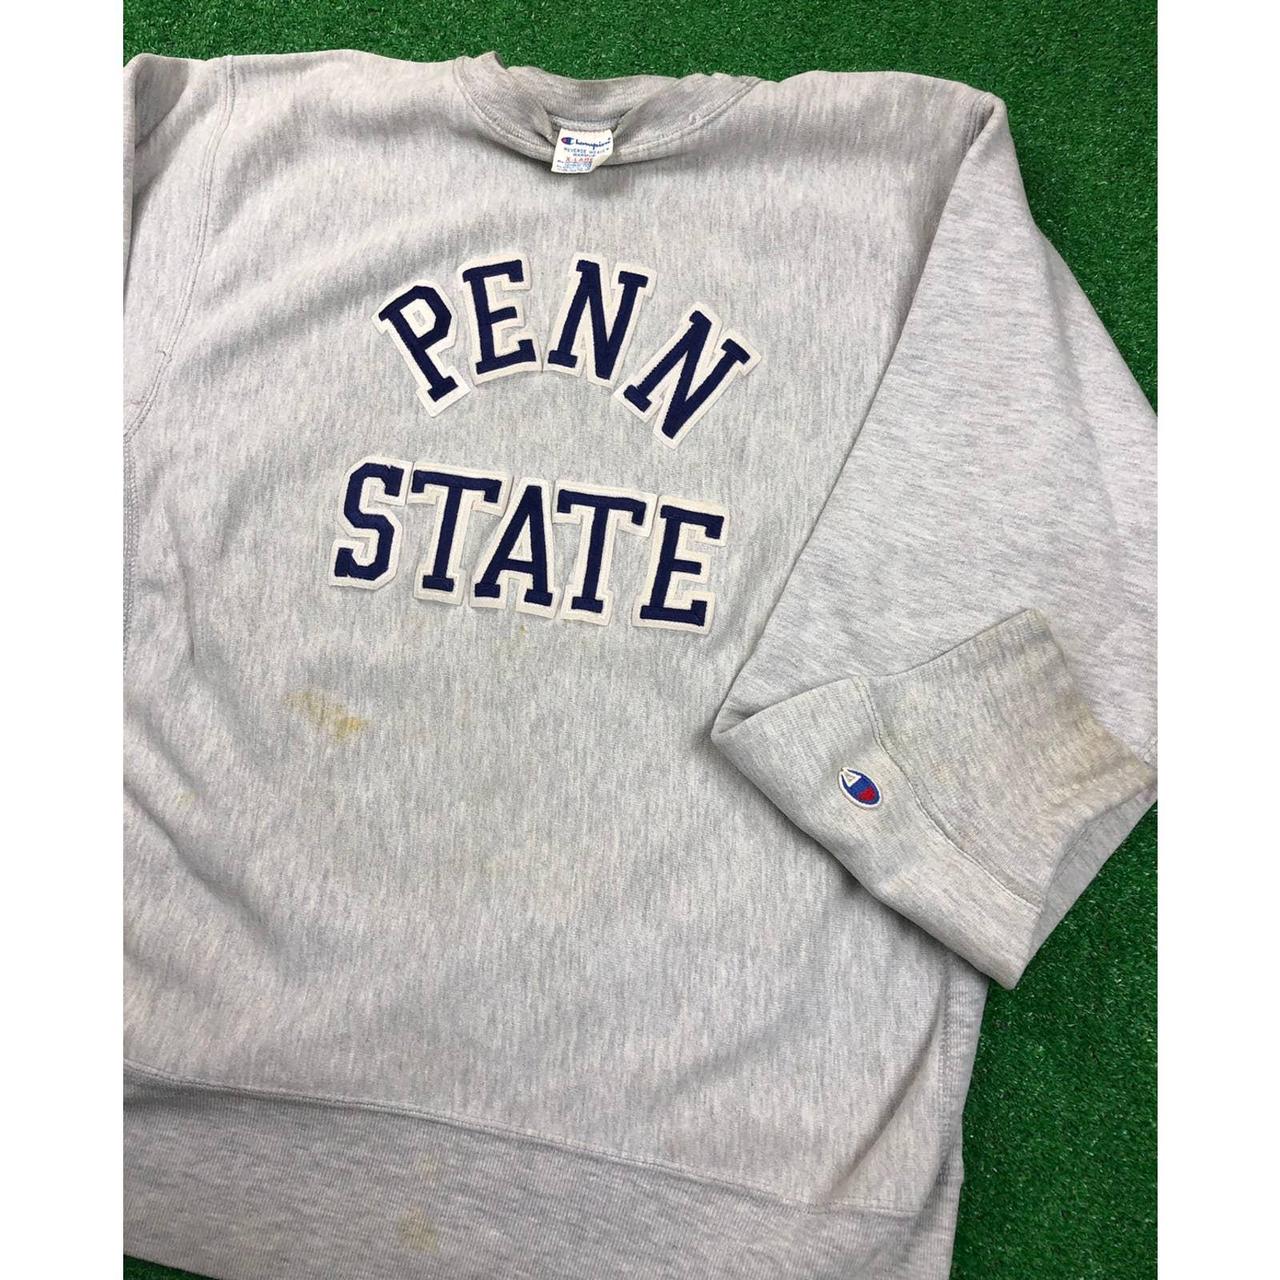 Vintage 80s Champion x Penn State Reverse Weave Warm... - Depop